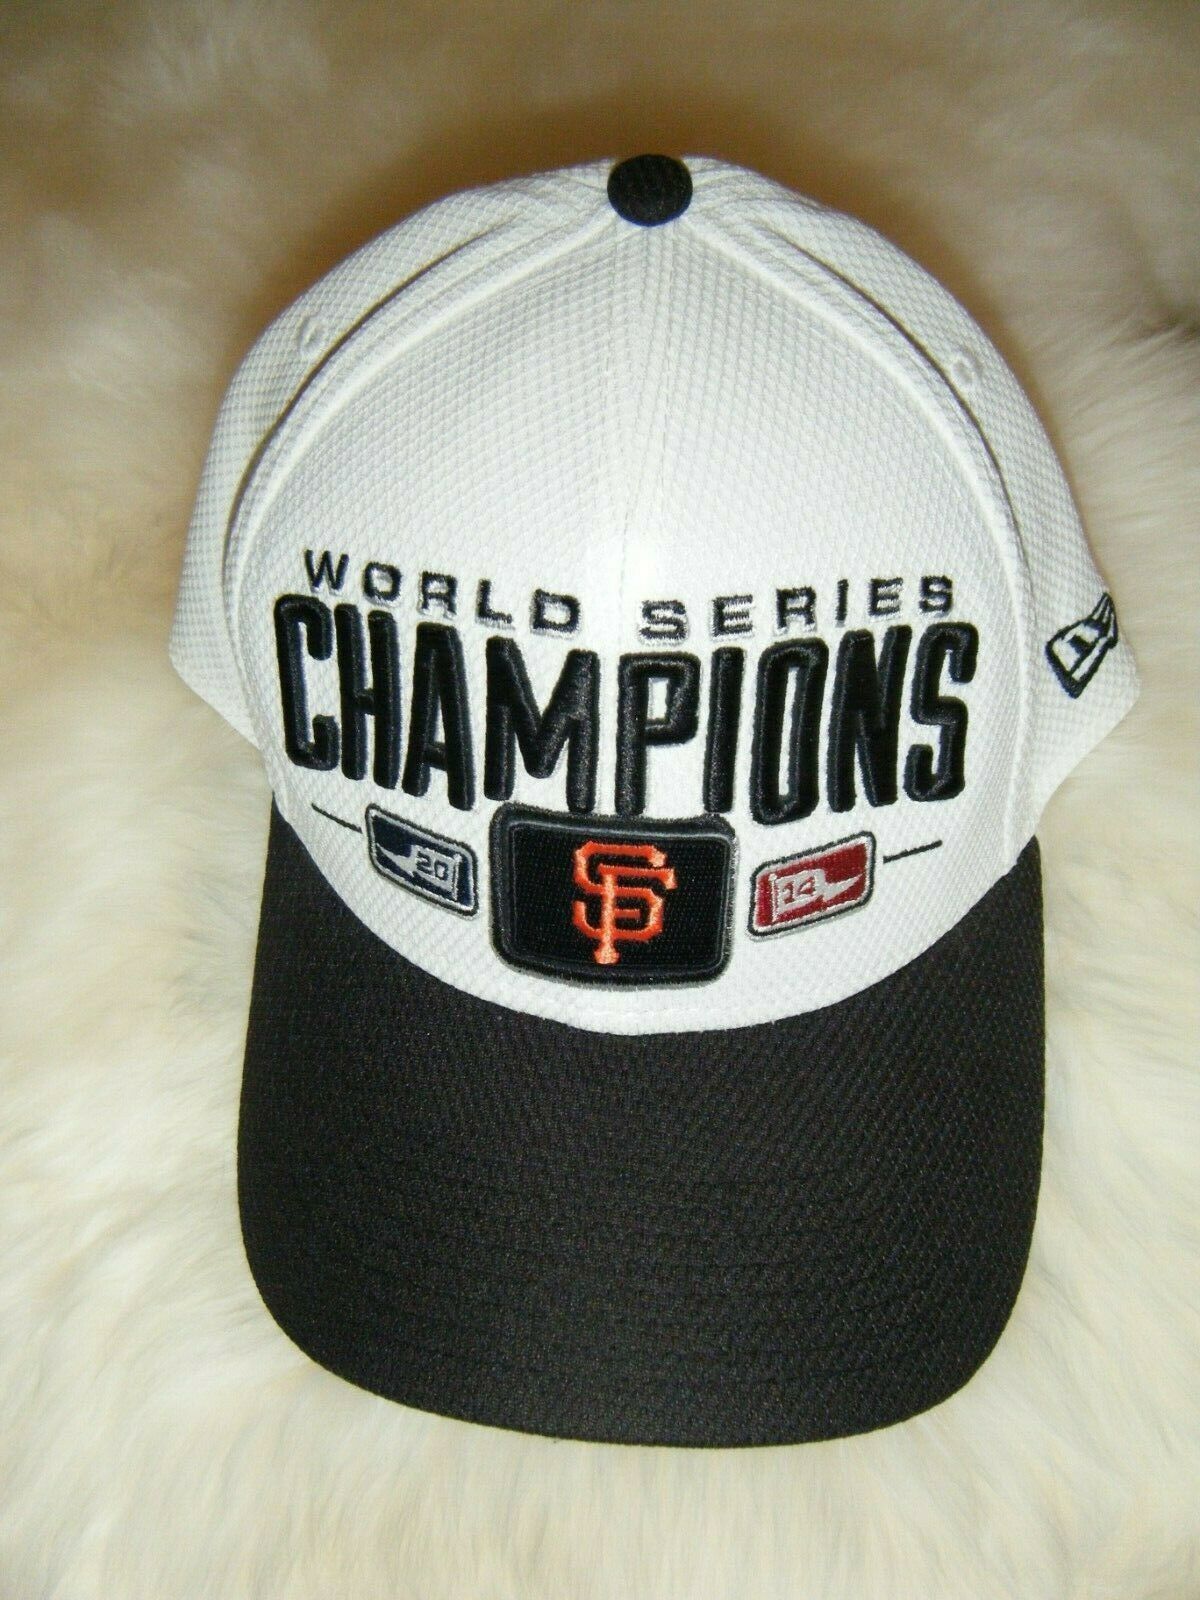 Primary image for WORLD SERIES CHAMPIONS 2014 San Francisco Giants Baseball Cap Hat M/L New Era